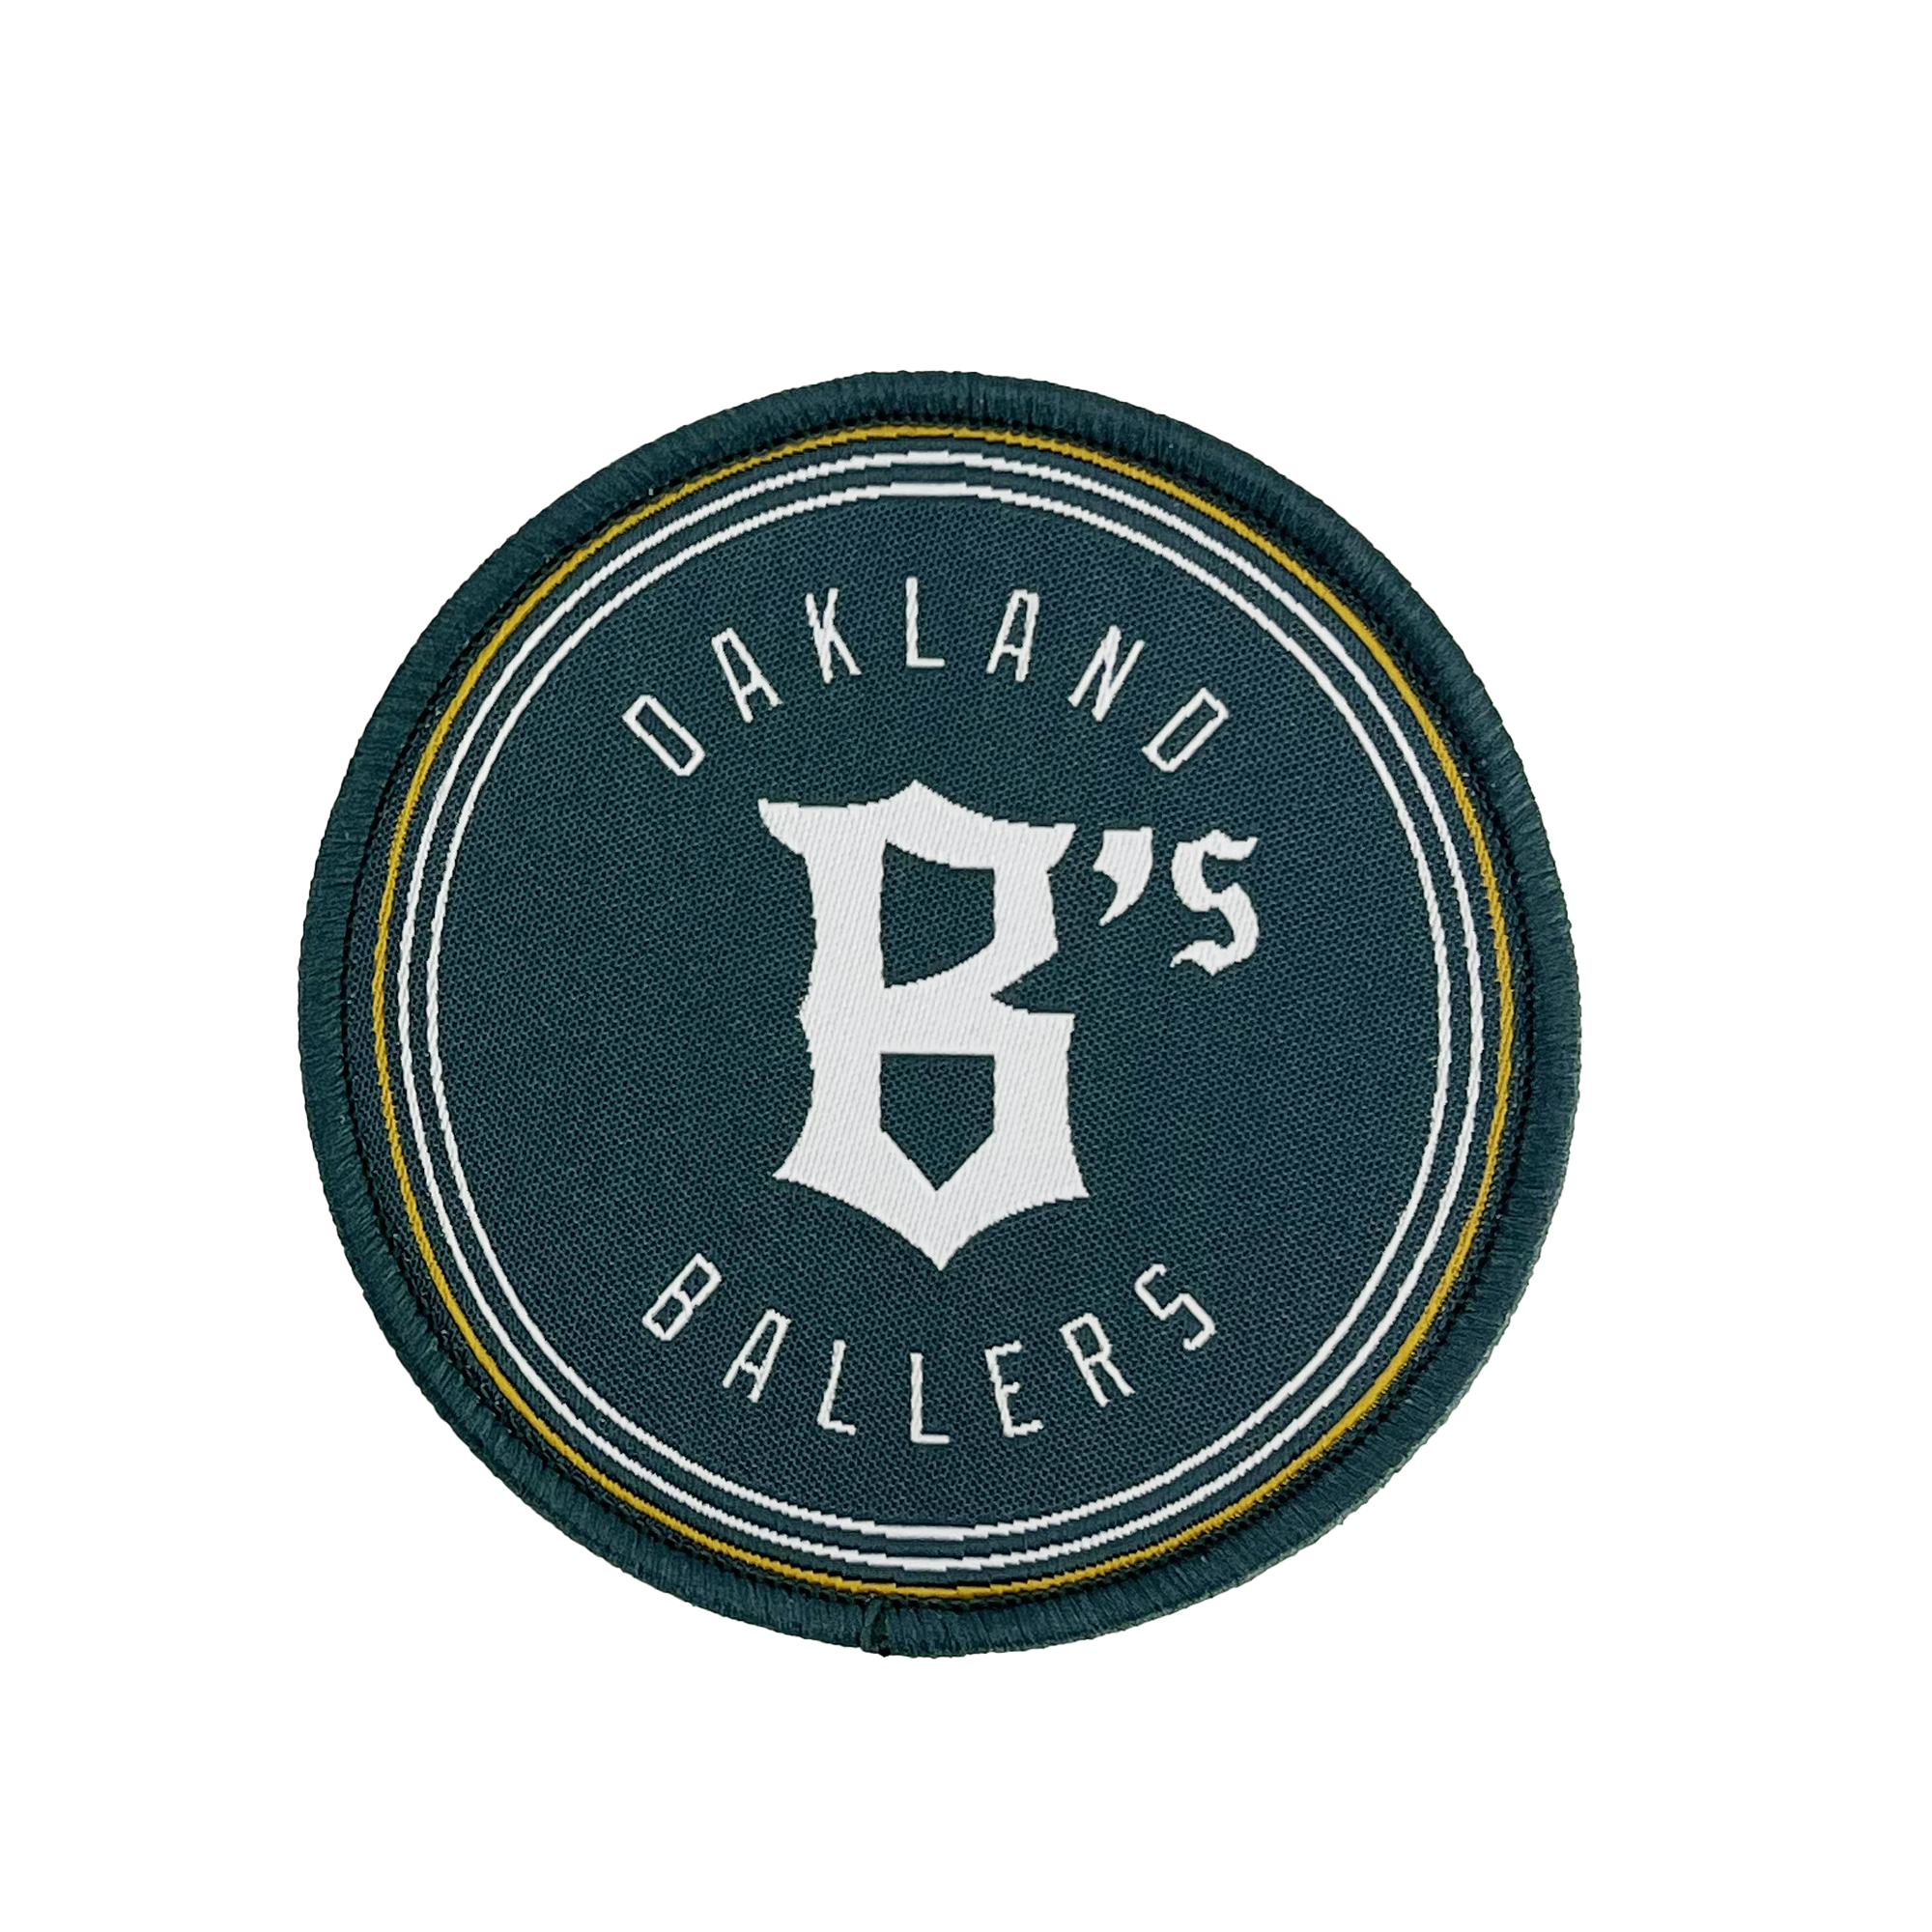 Oakland Ballers Logo Patch